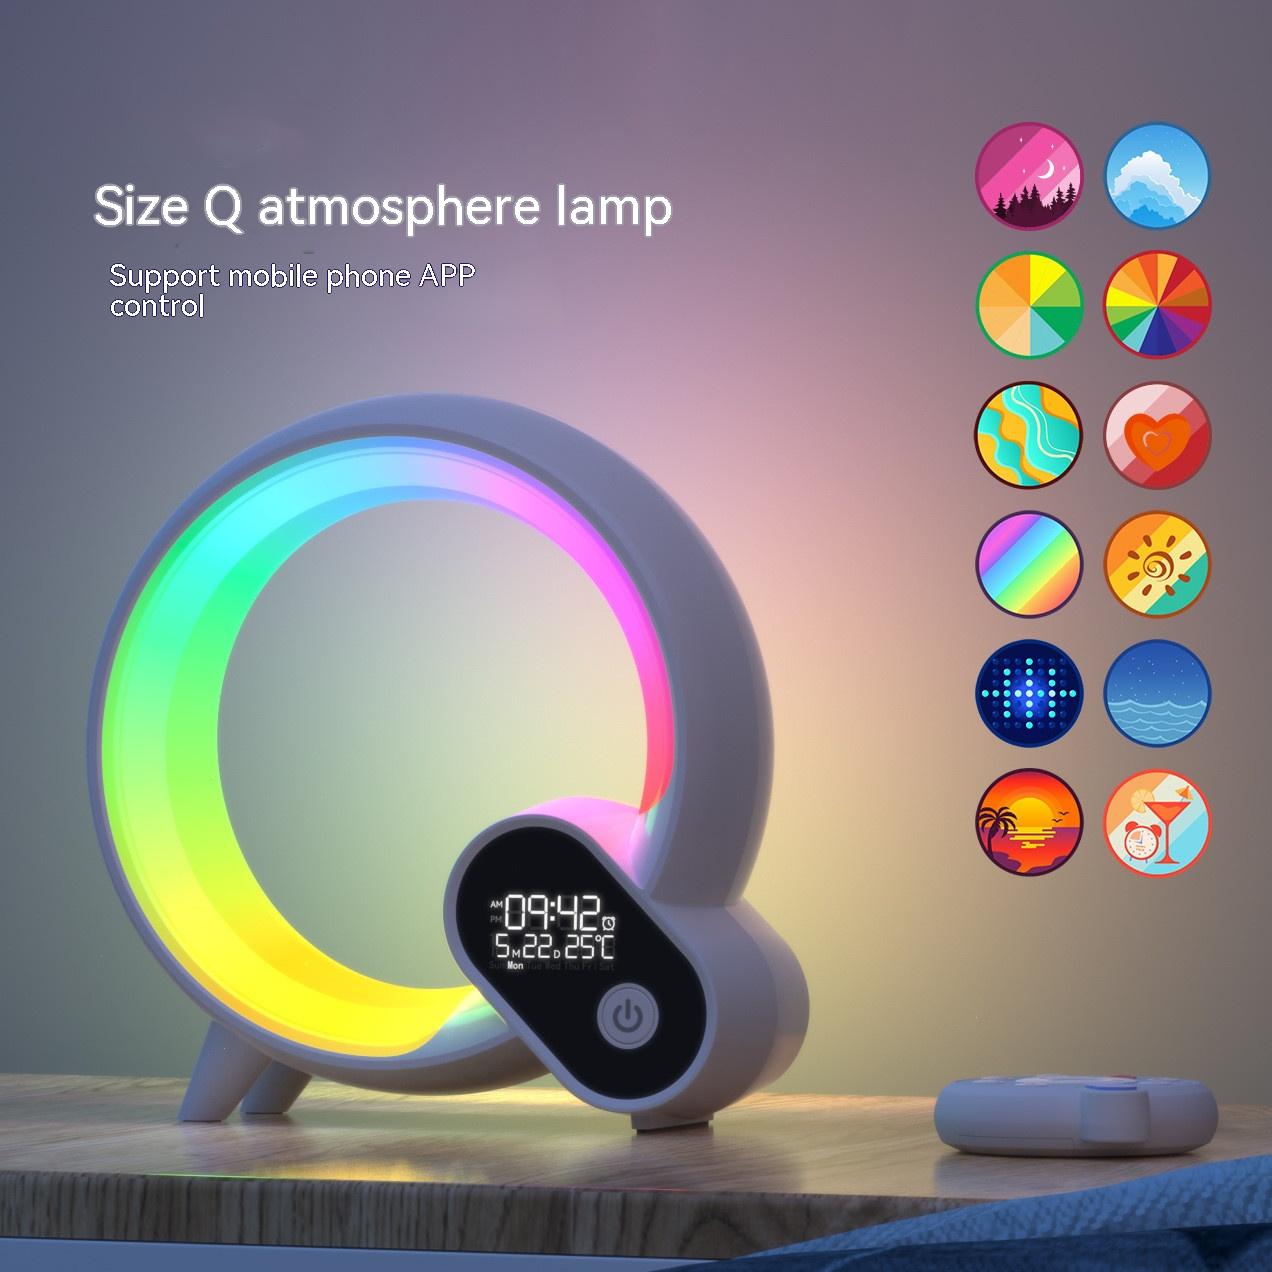 Digital Alarm Clock with Bluetooth Audio and light